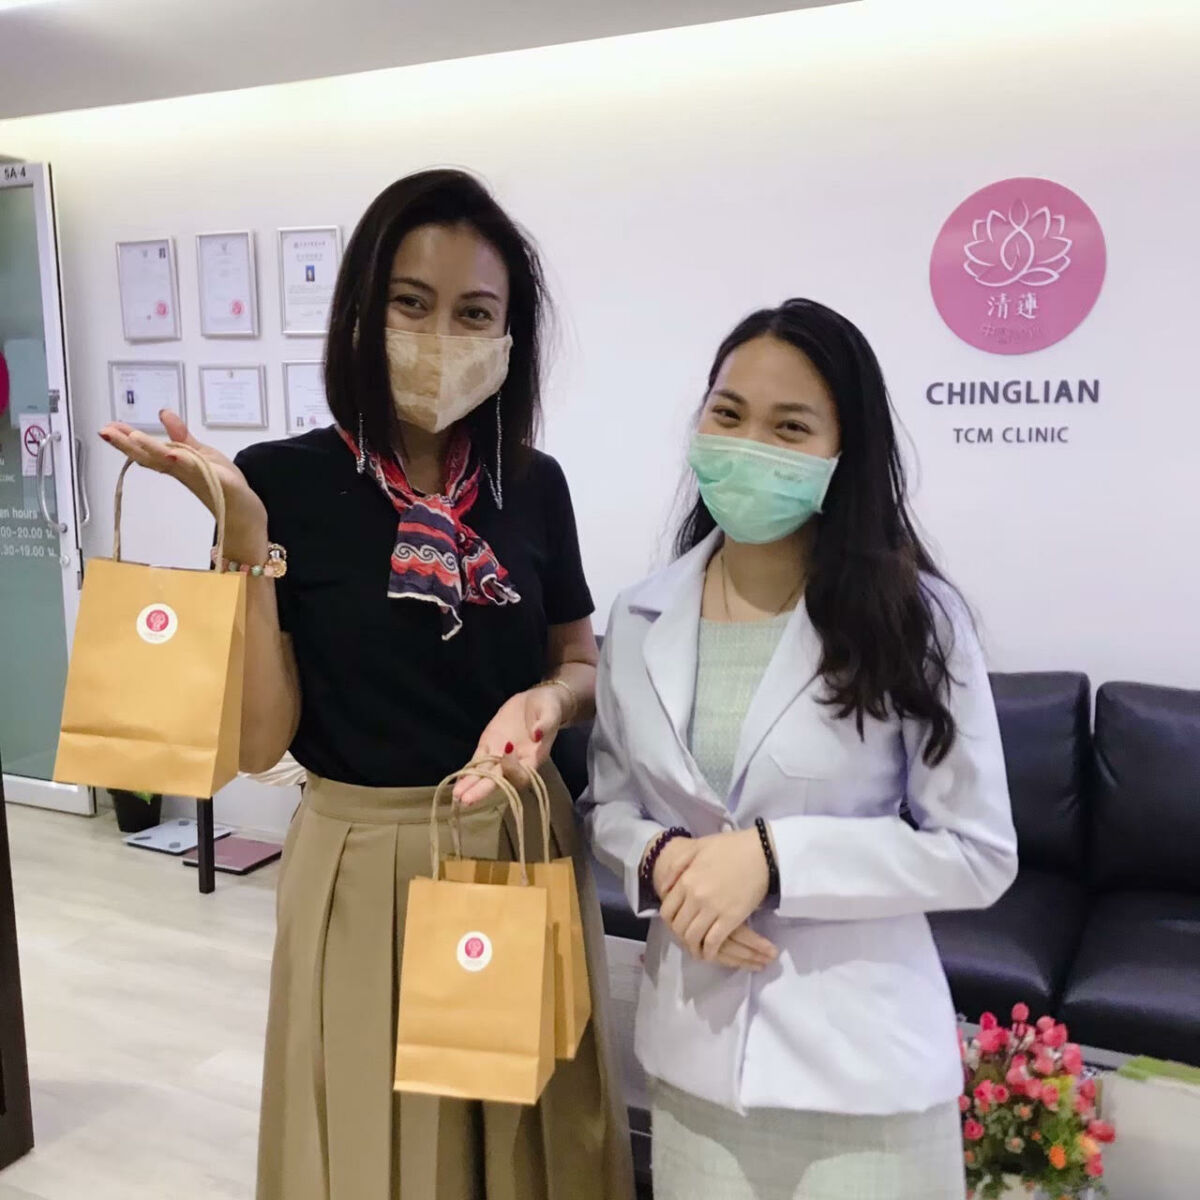 Chinglian TCM Clinic